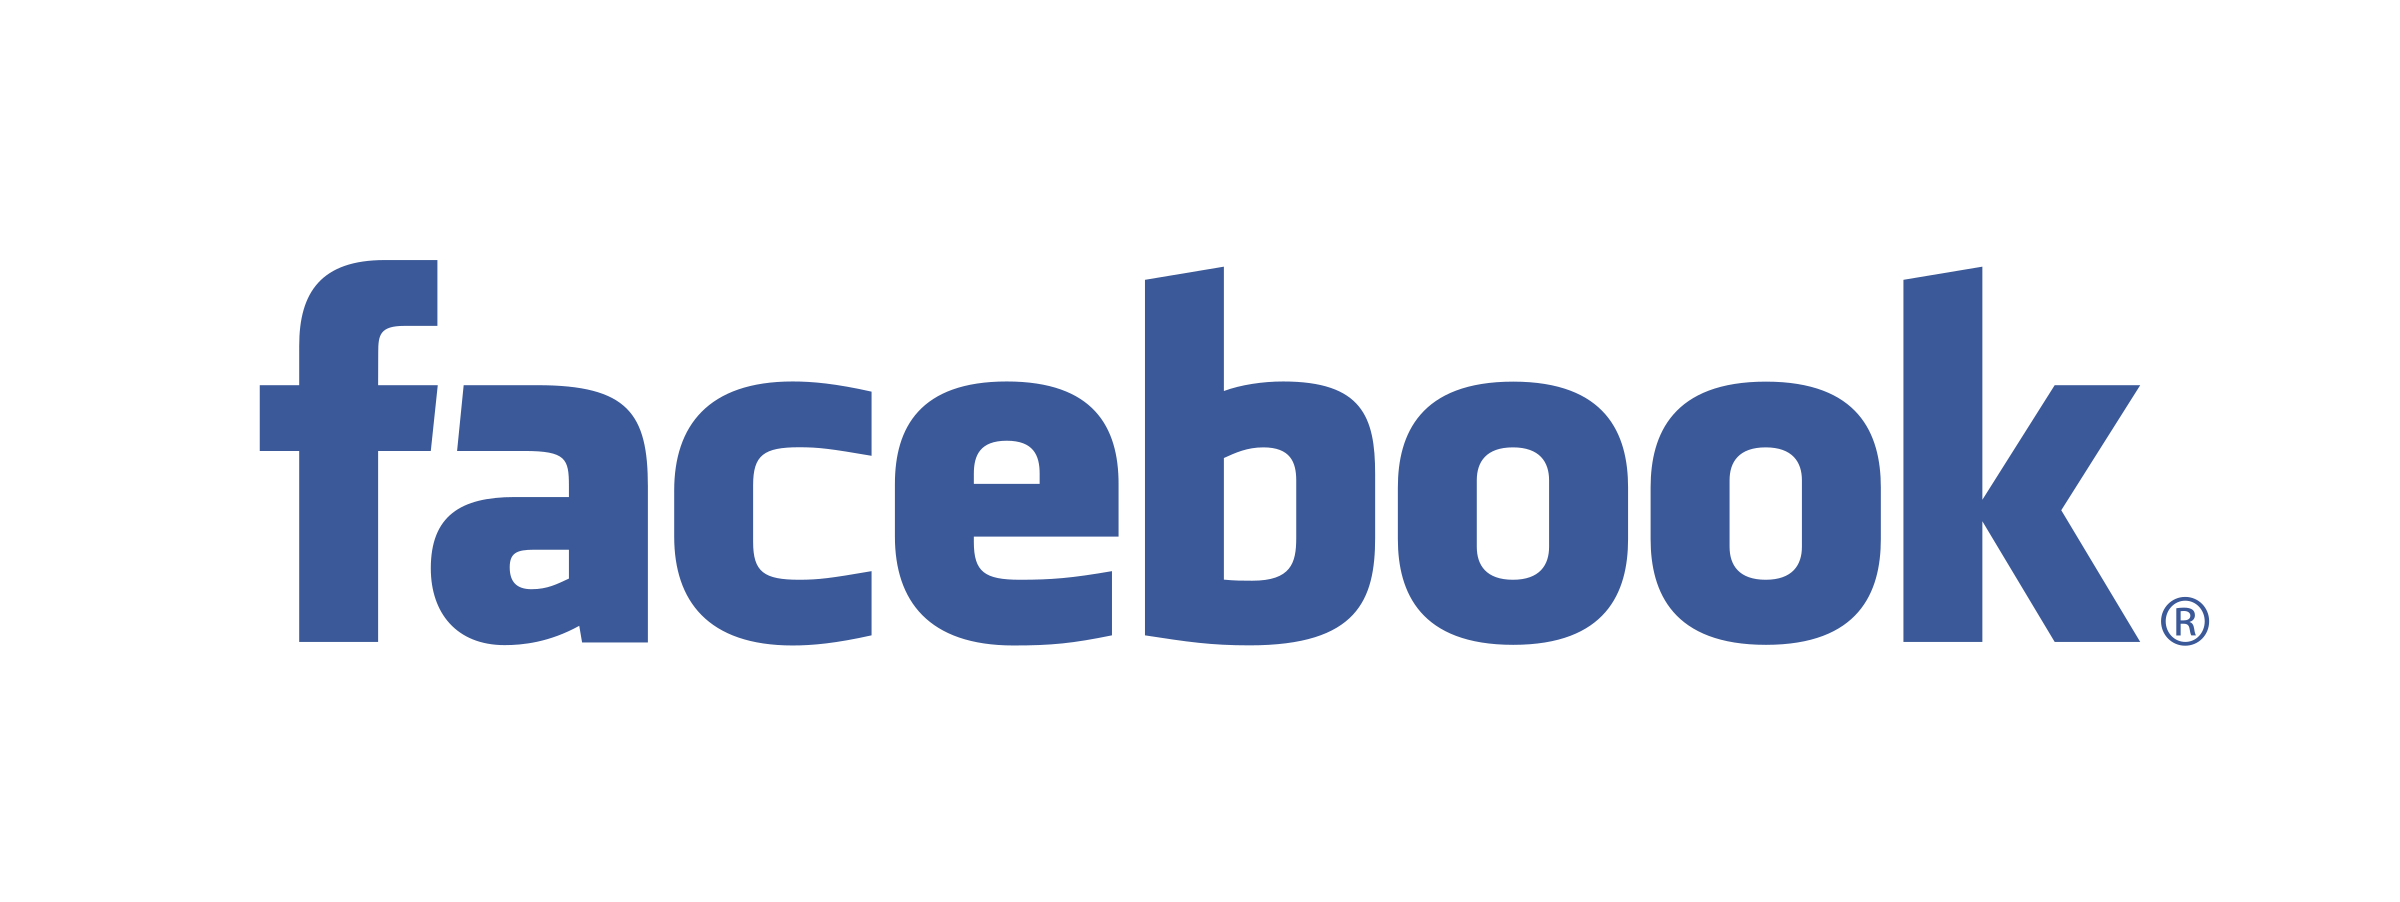 Facebook Icon Original Logo 2020 #32251